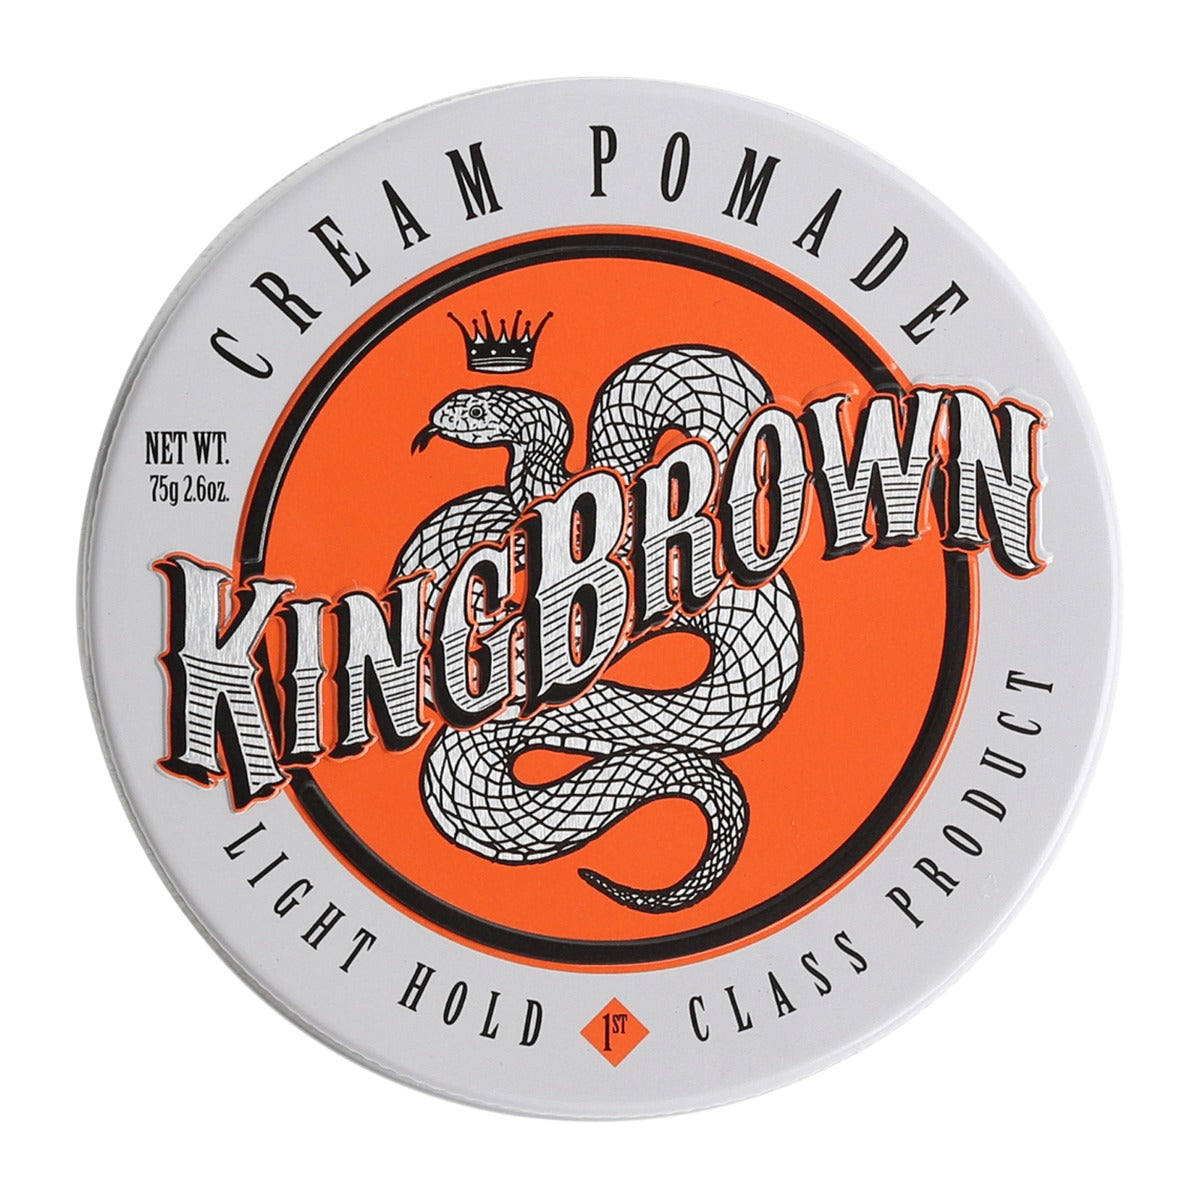 King Brown Cream Pomade 75g - Rockabilly Australia Pty Ltd